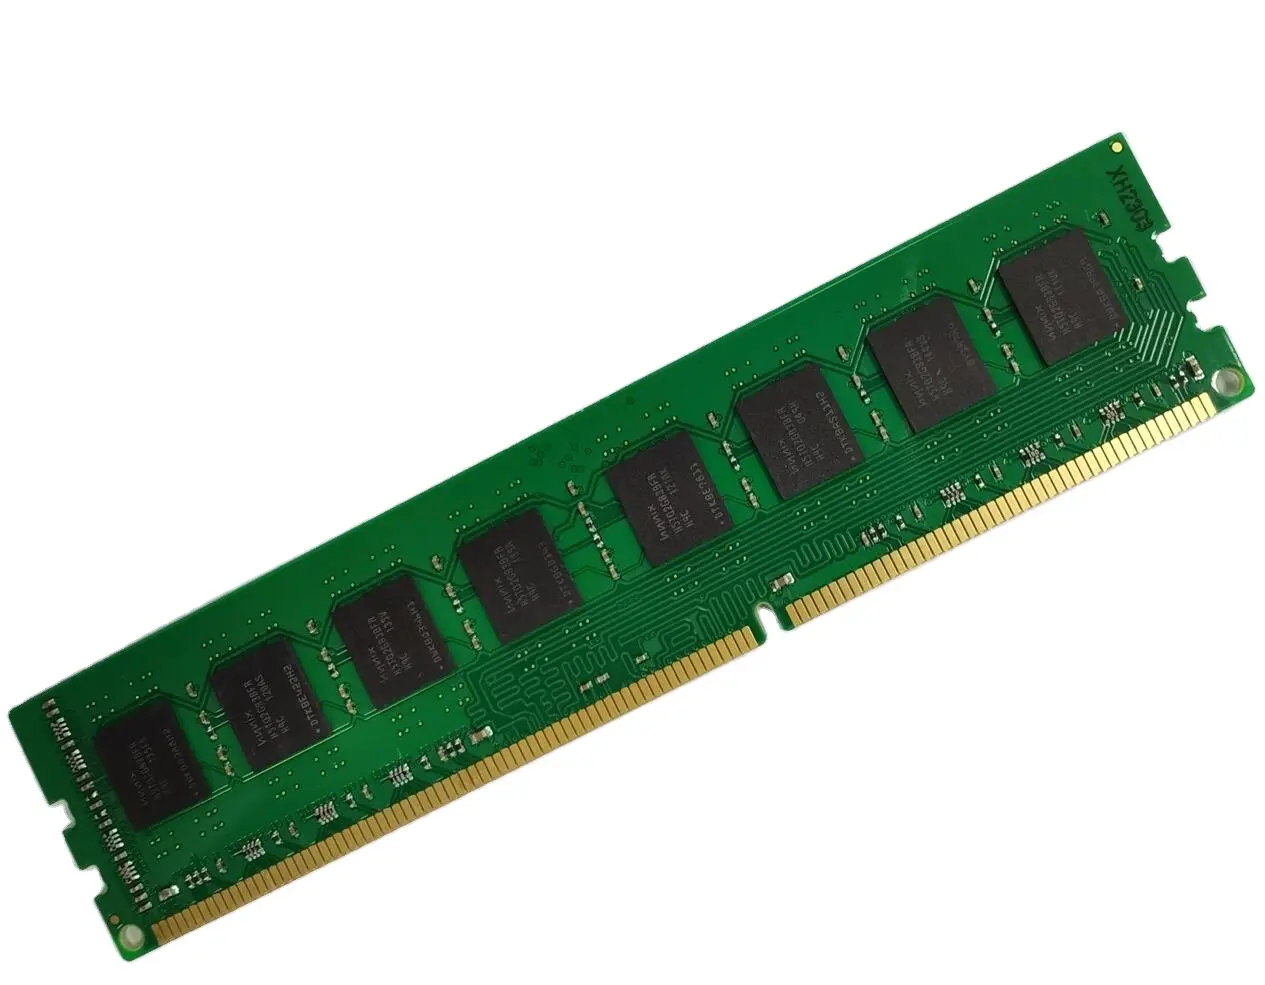 Yeni ram masaüstü dizüstü ddr ddr4 RAM DDR3 2666mhz 3200mhz ddr3 ddr4 4g 8g 16g bellek modülü Ddr3 ram